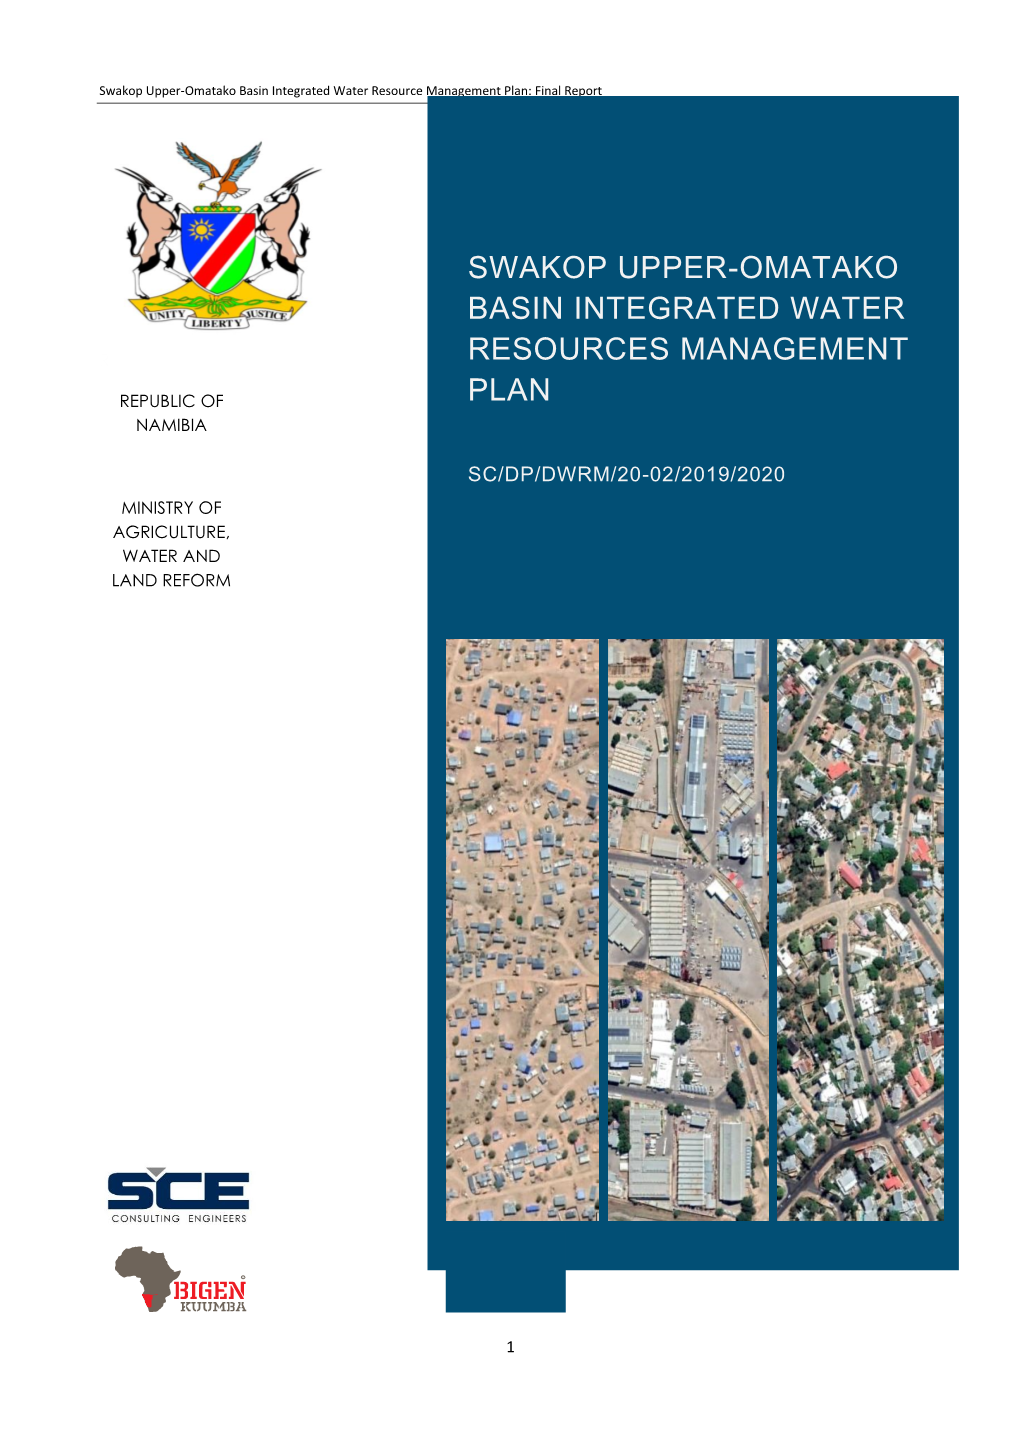 Swakop Upper-Omatako Basin Integrated Water Resources Management Plan